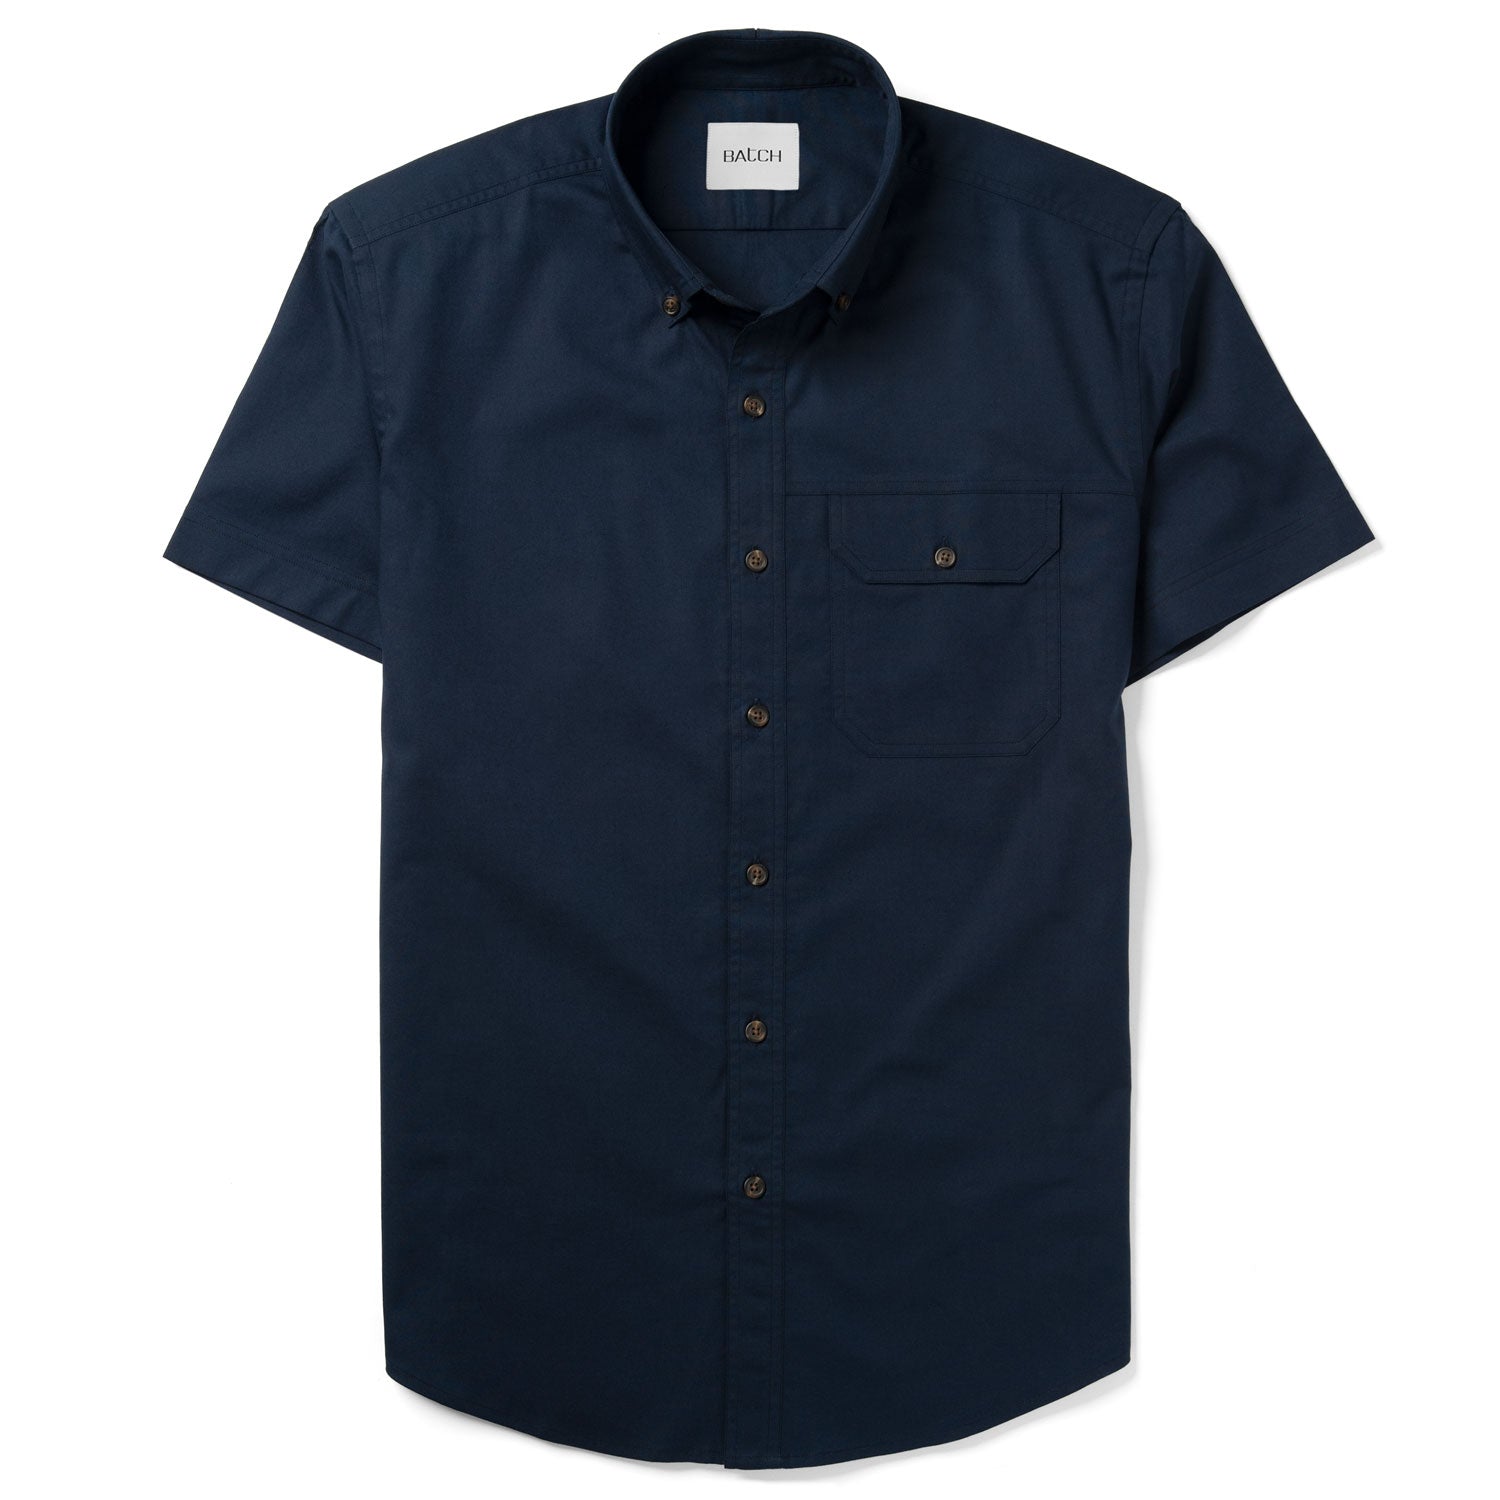 Builder Short Sleeve Casual Shirt – Dark Navy Oxford